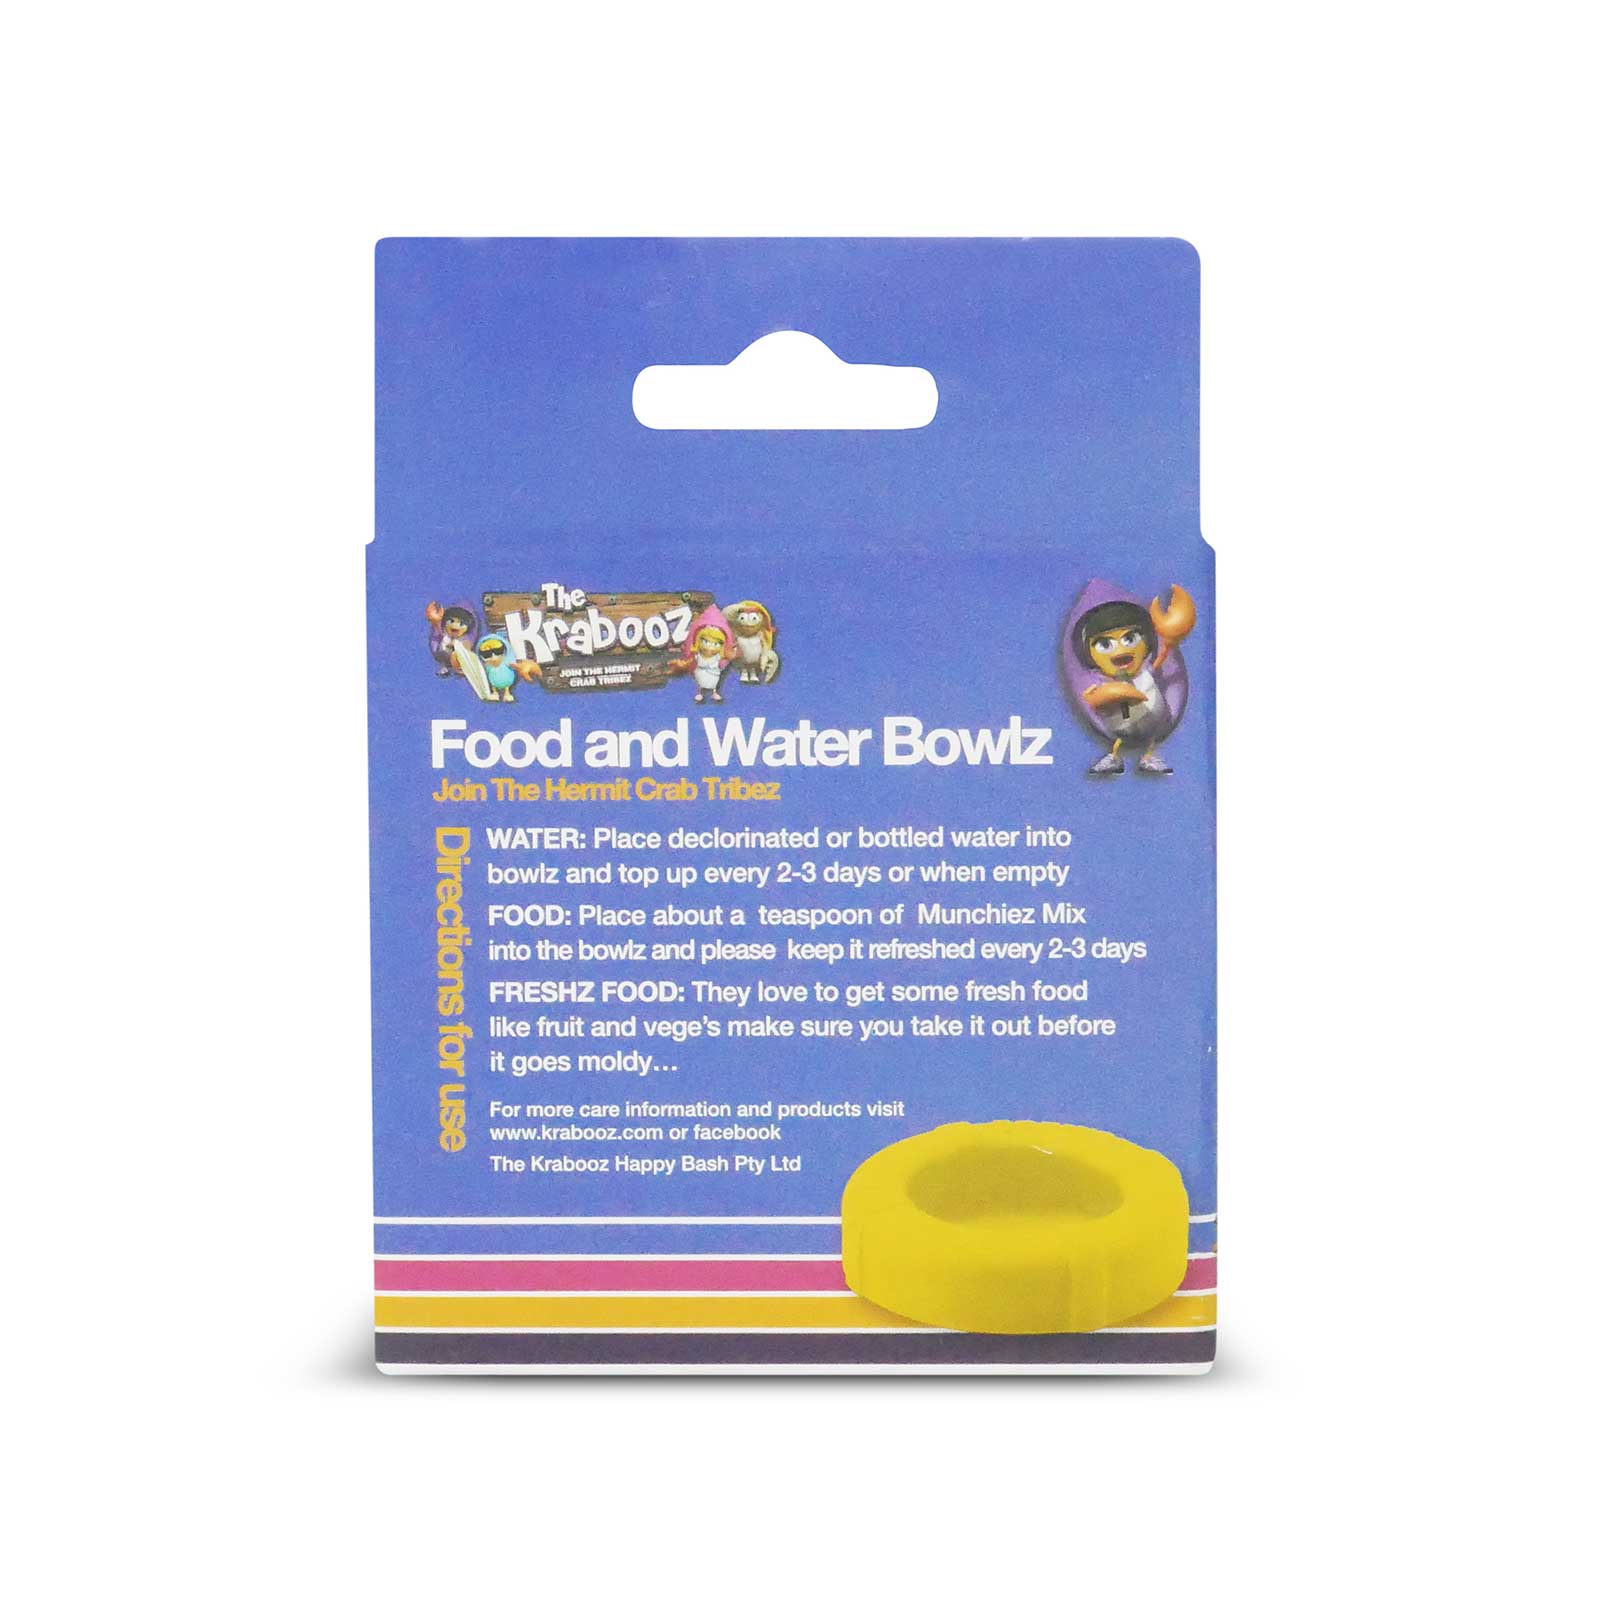 Krabooz Food and Water Bowlz